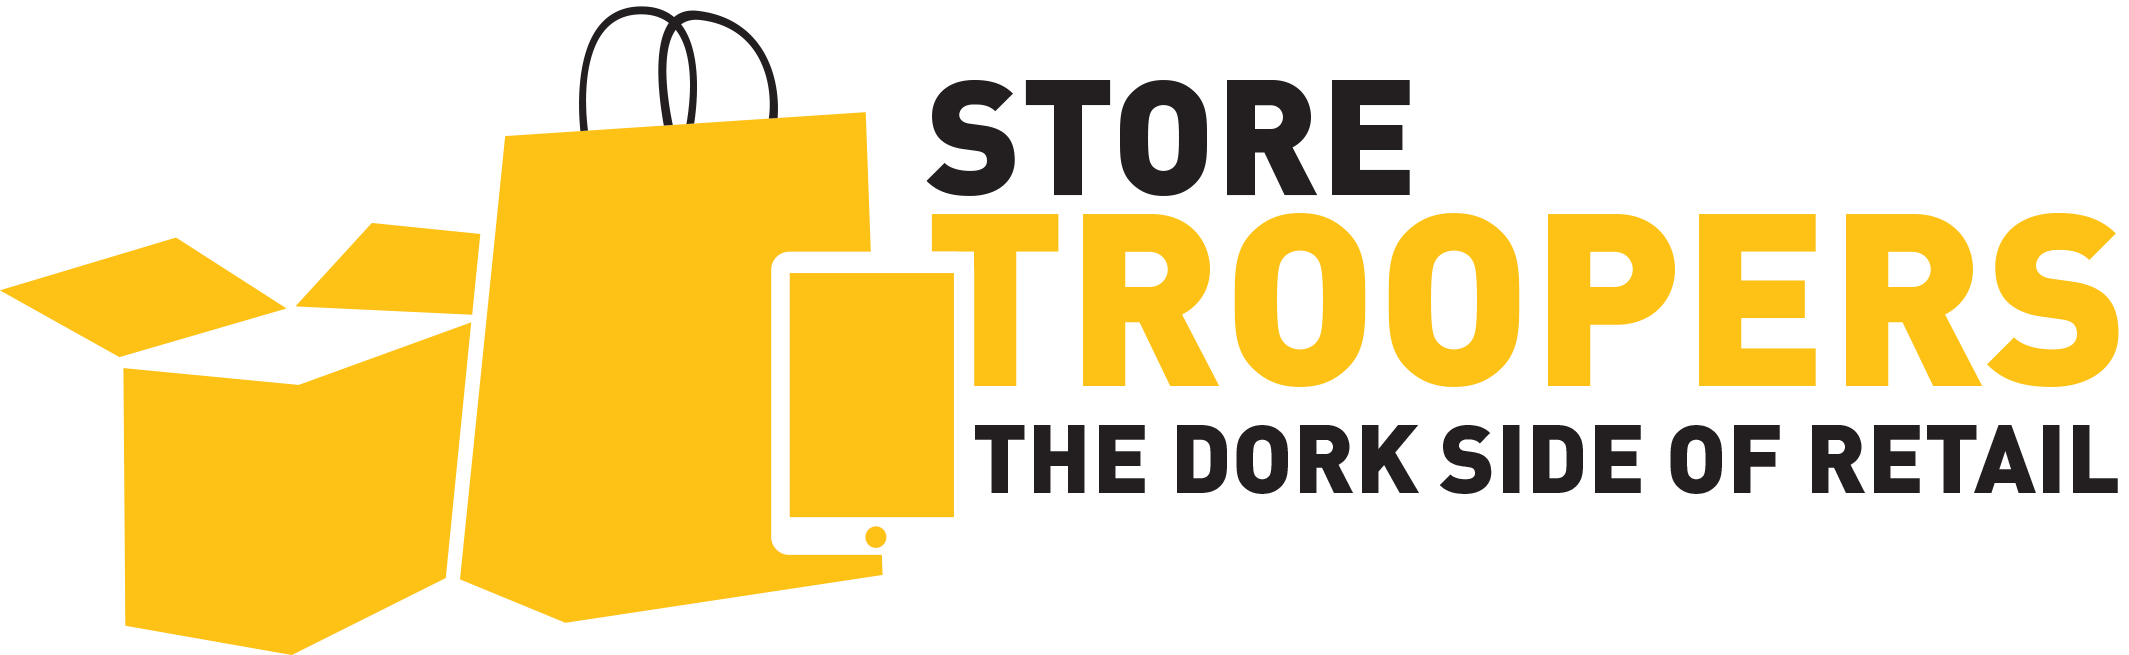 StoreTroopers